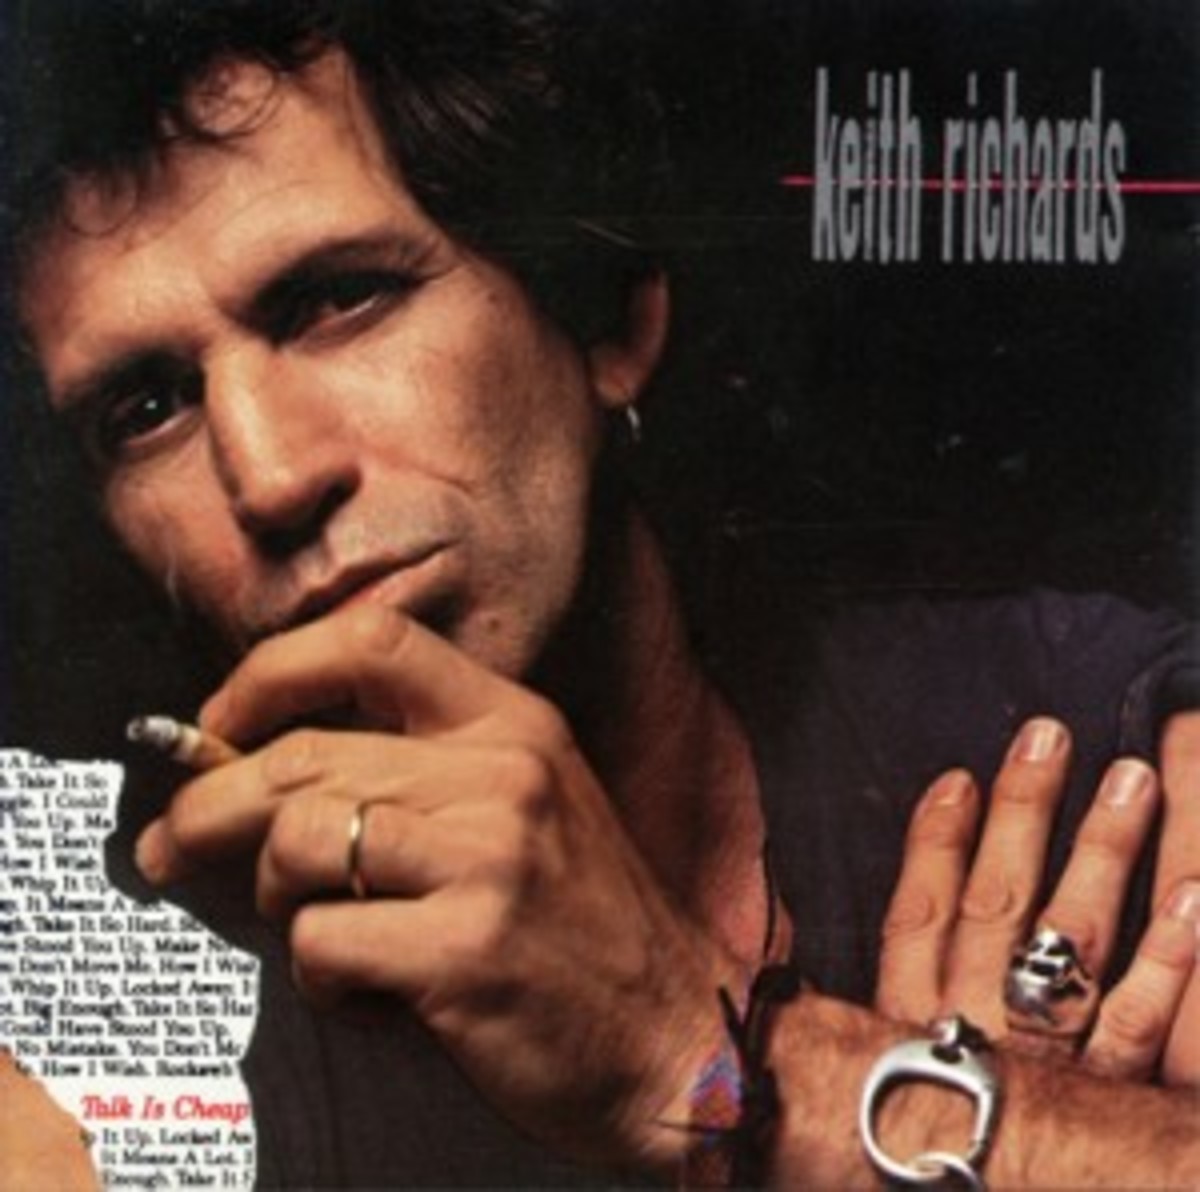 Keith Richards Talk is Cheap album